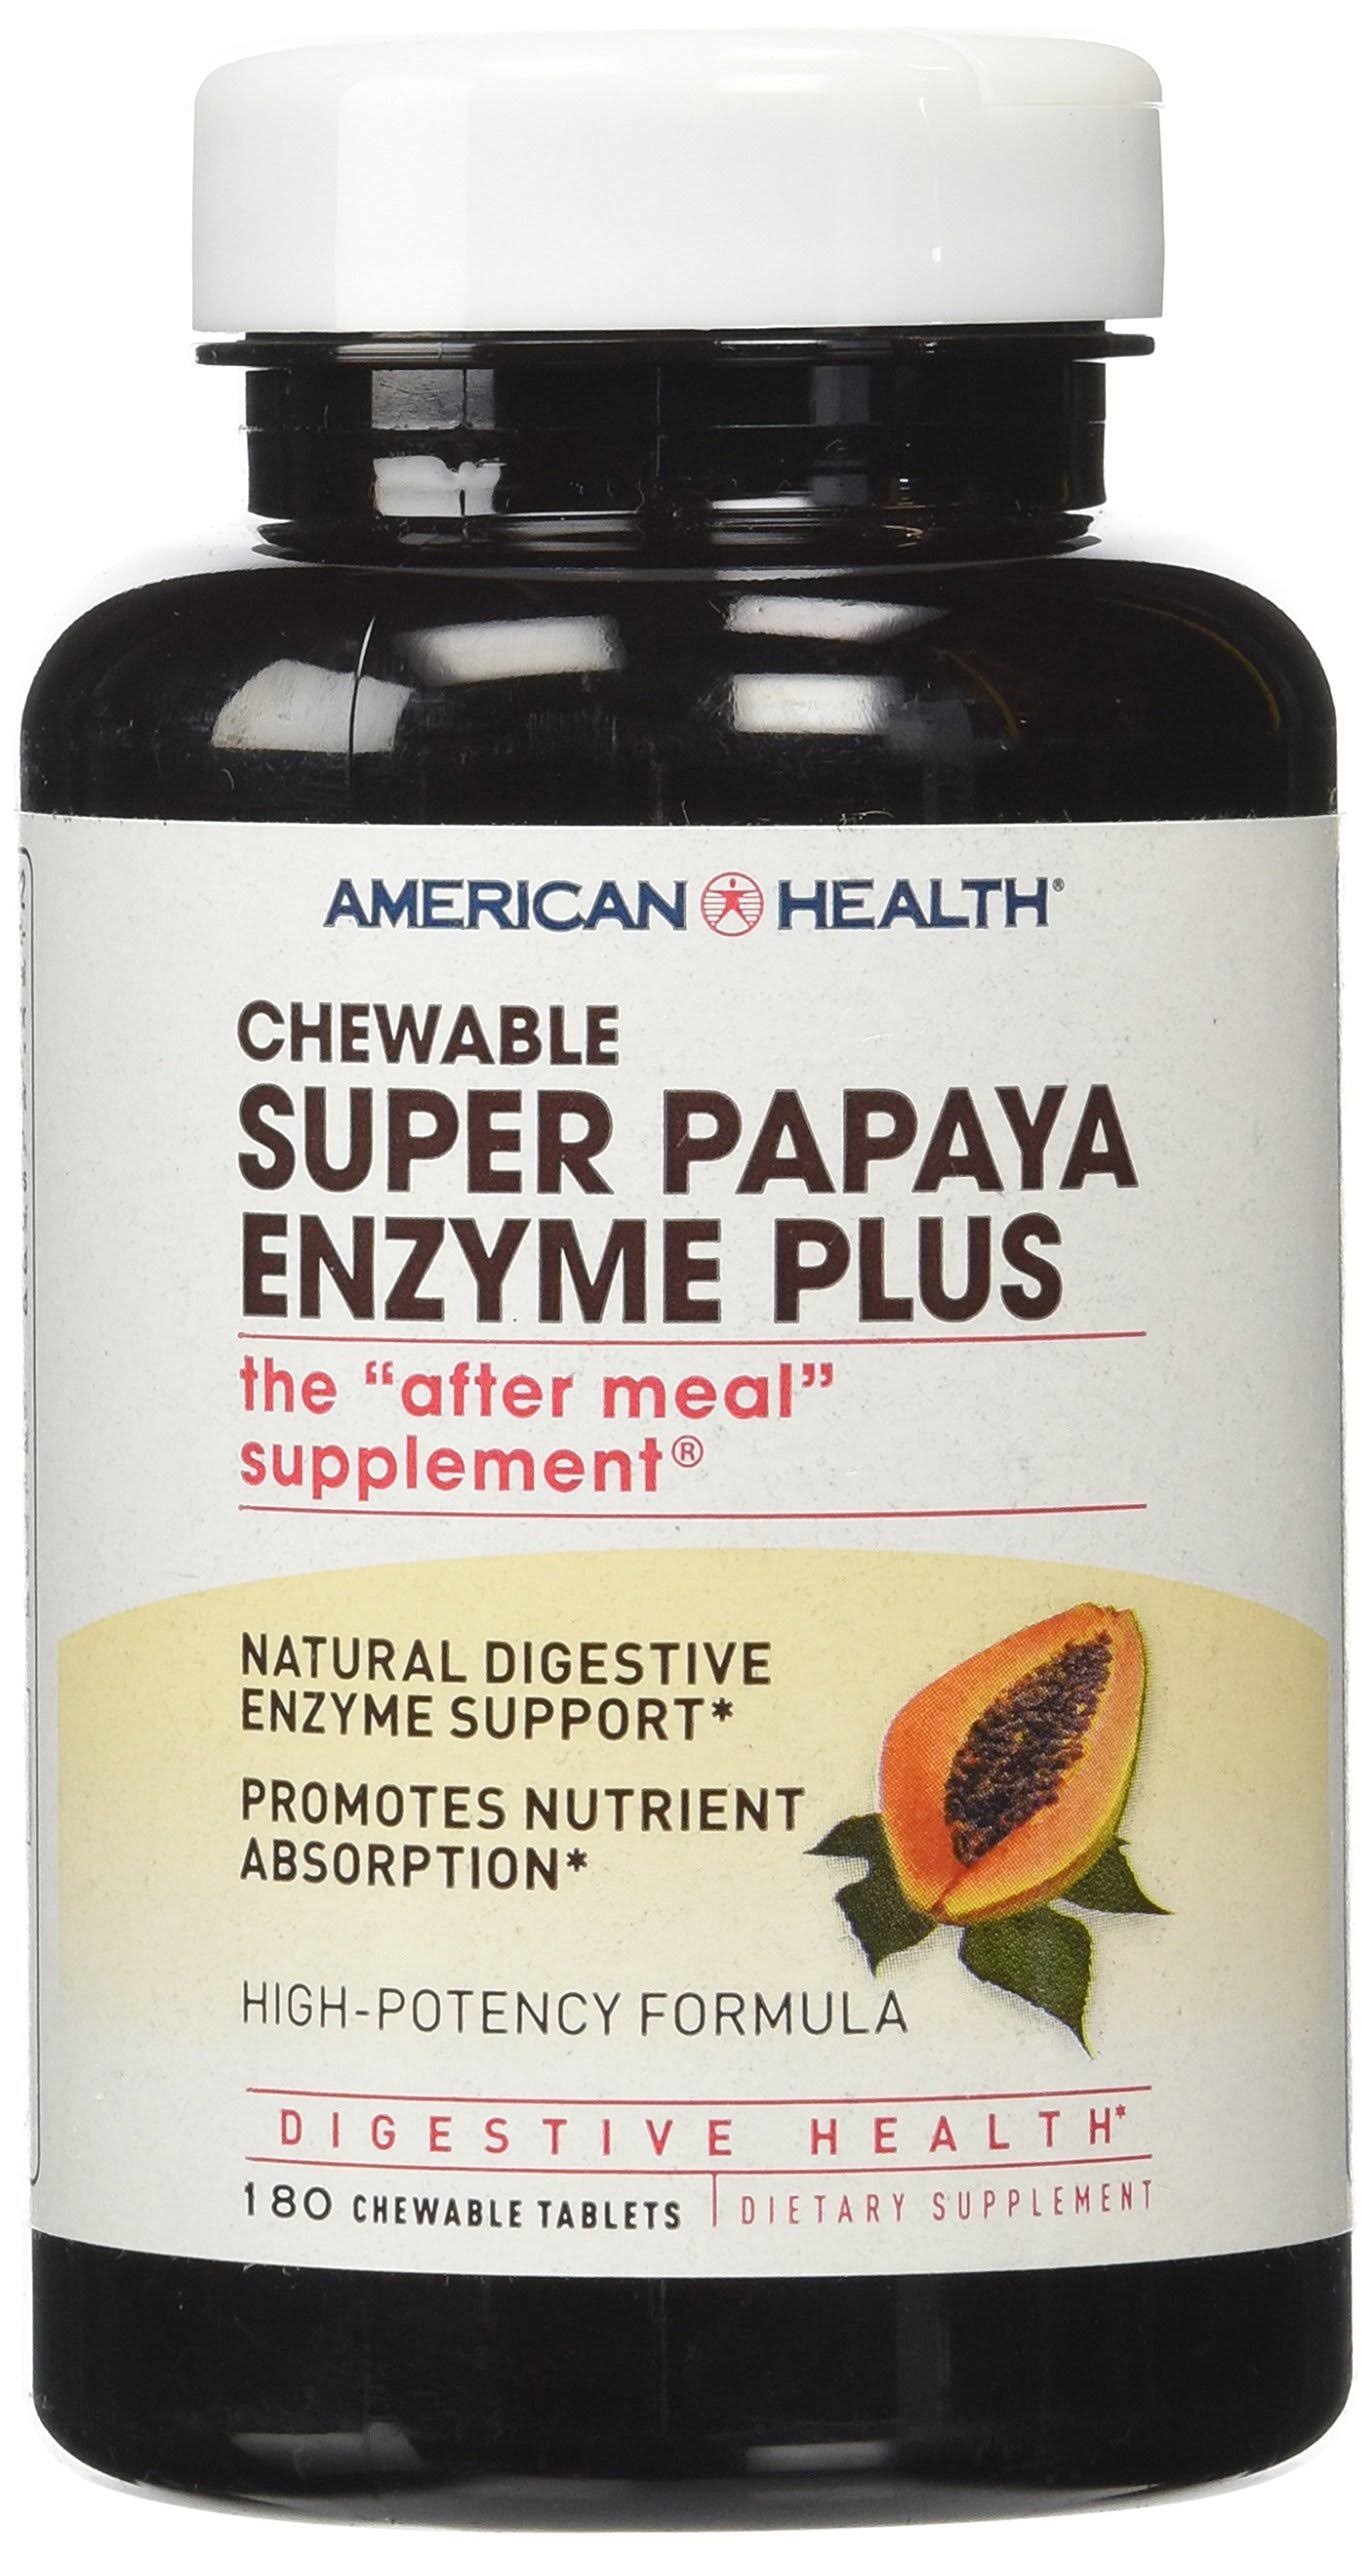 American Health Chewable Enzyme Plus Dietary Supplement - Super Papaya, x180